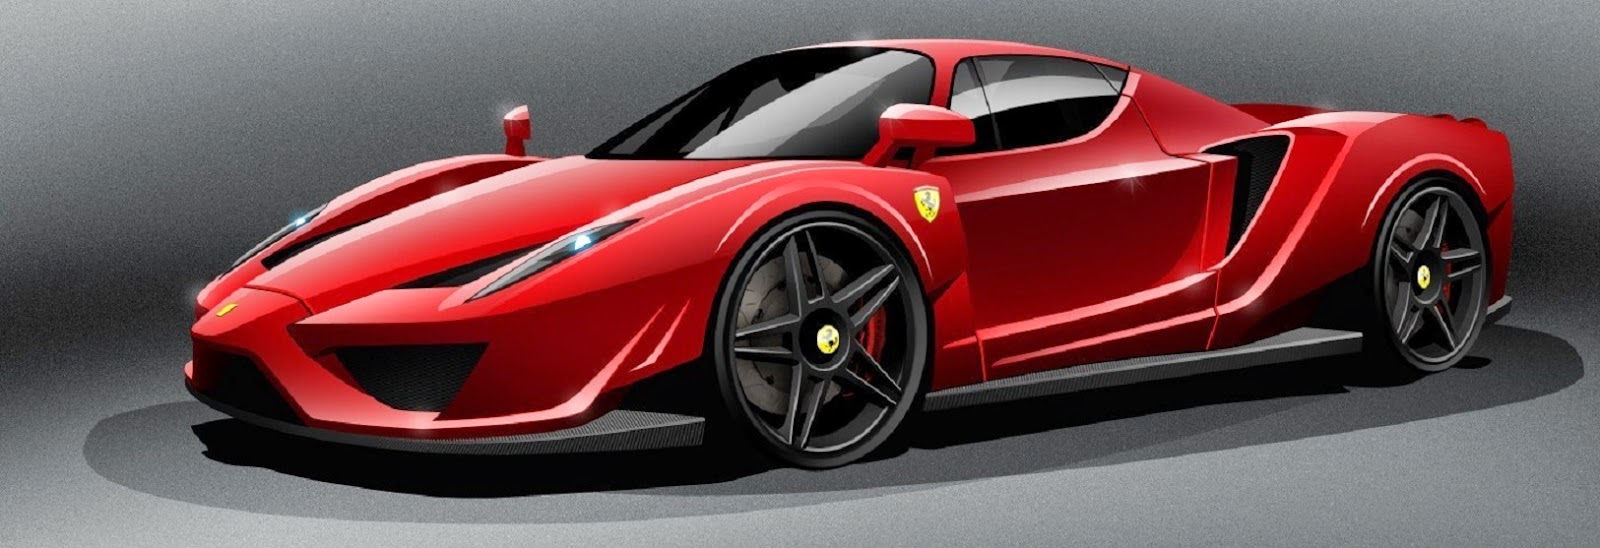 Foto Mobil Ferrari Modif Terbaru Modifikasi Style